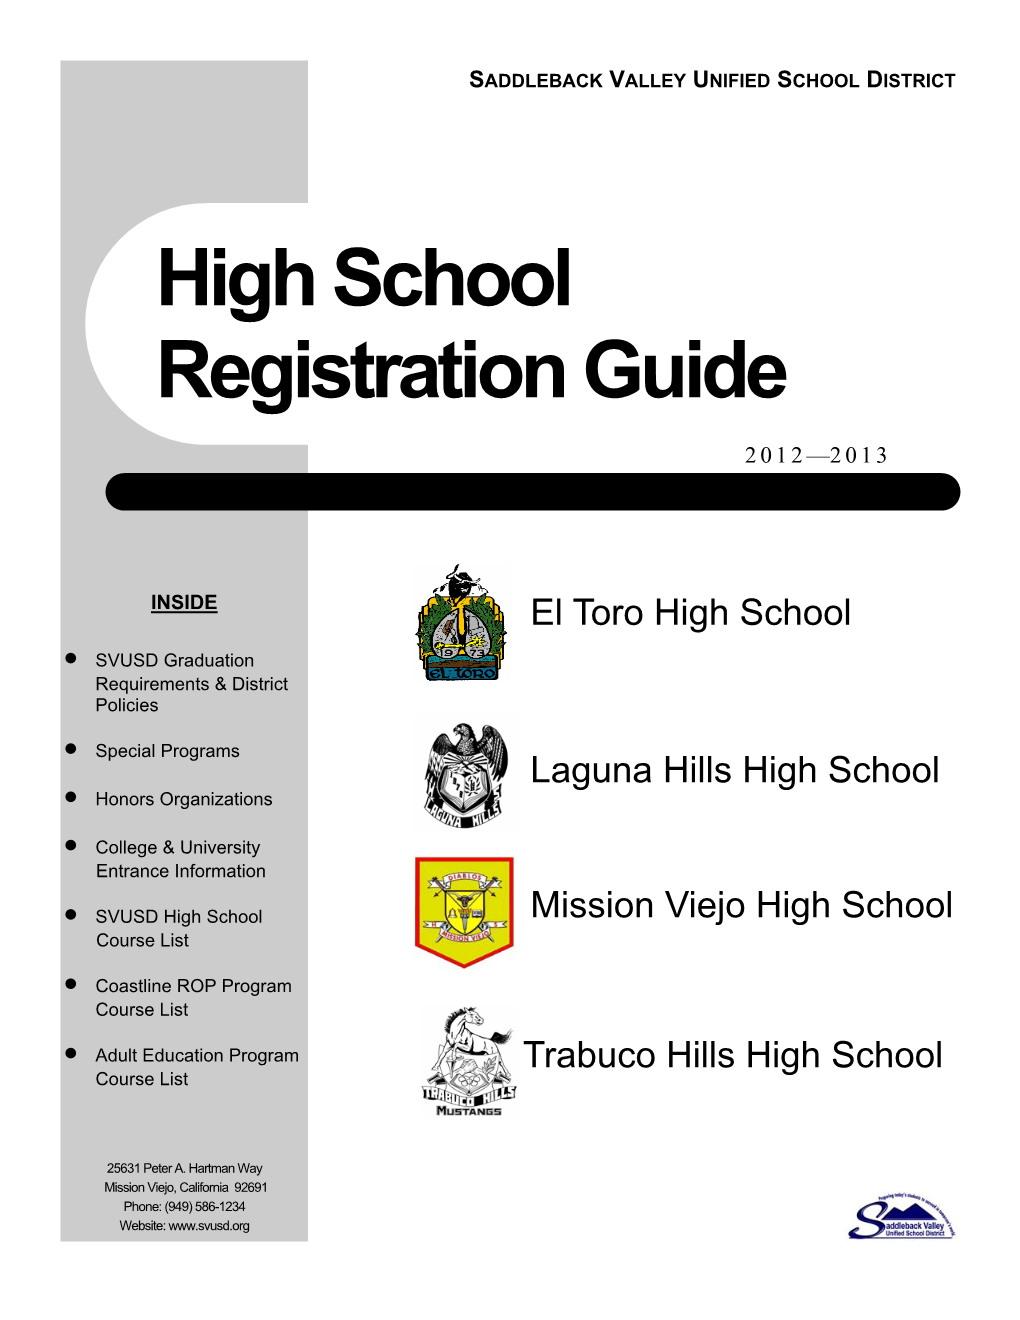 High School Registration Guide